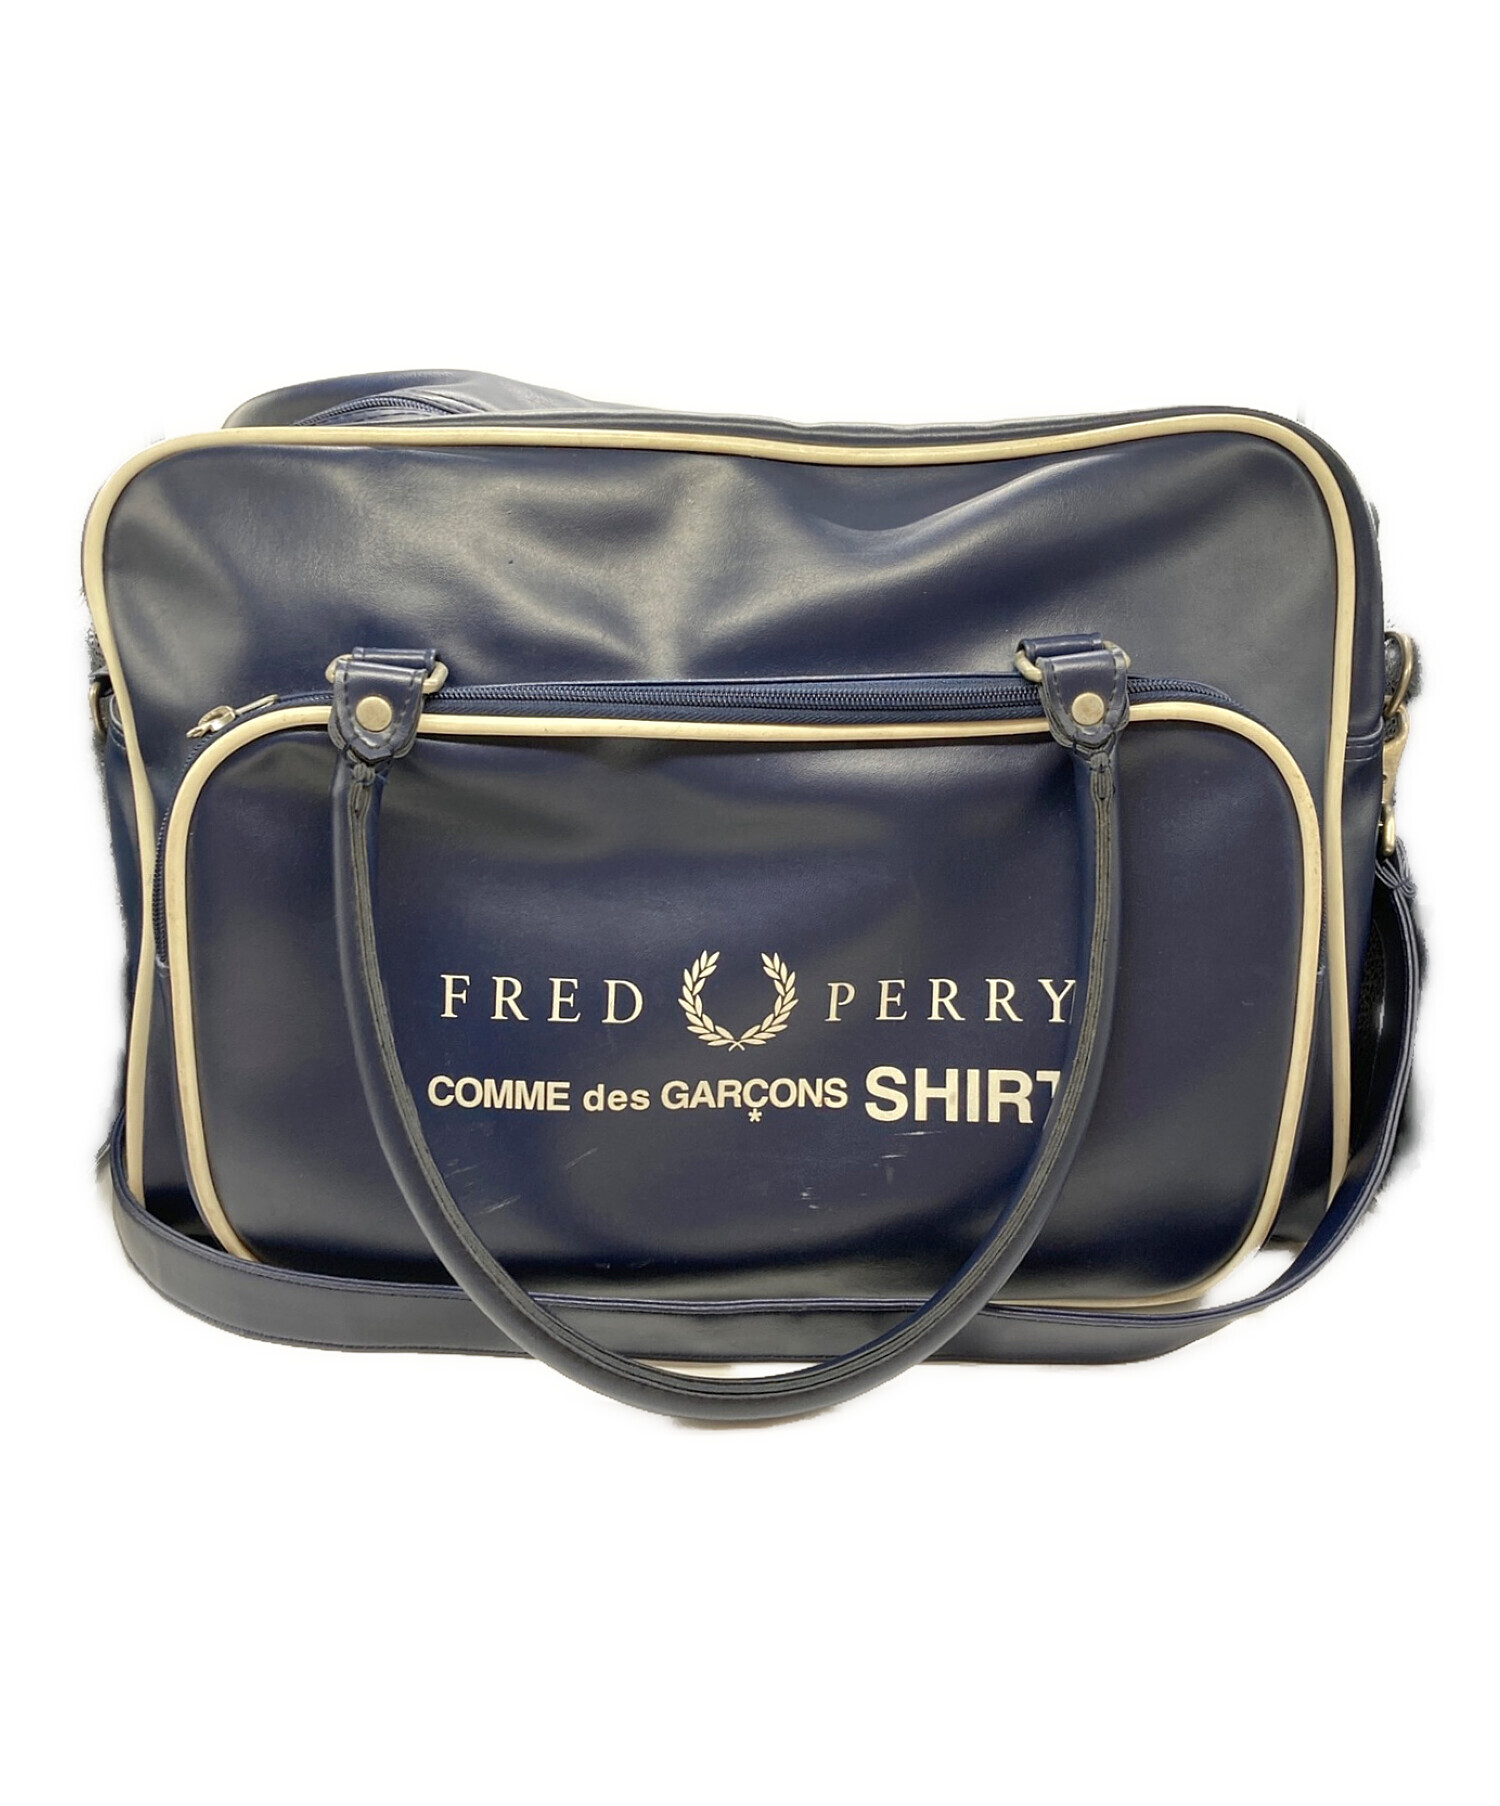 COMME des GARCONS SHIRT (コムデギャルソンシャツ) FRED PERRY (フレッドペリー) 2WAYバッグ ネイビー